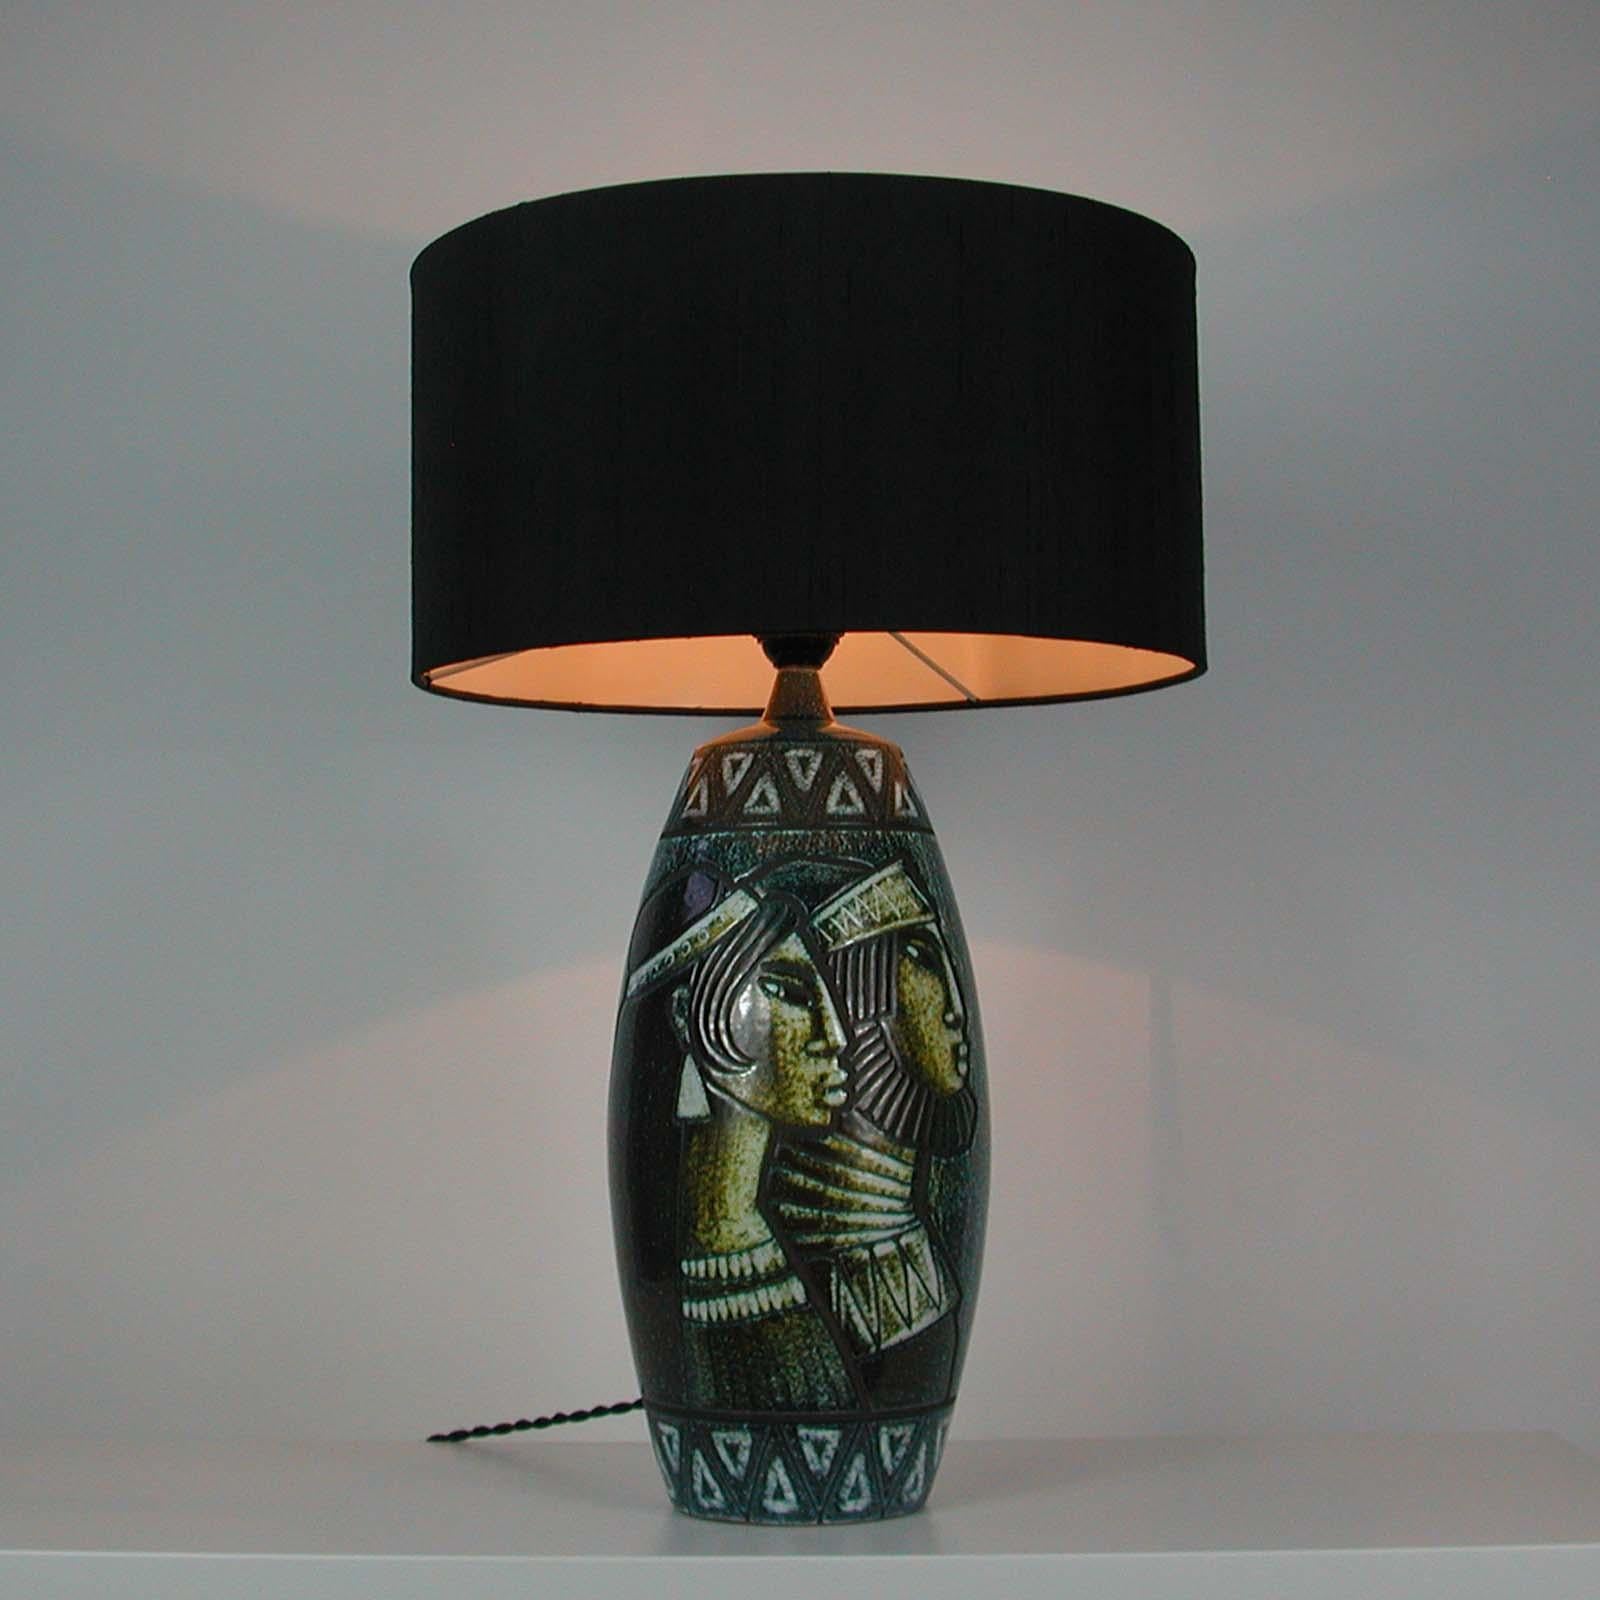 Midcentury Swedish Ceramic Table Lamp, Bonnie Rehnkvist for Falkenbergs, 1960s For Sale 4